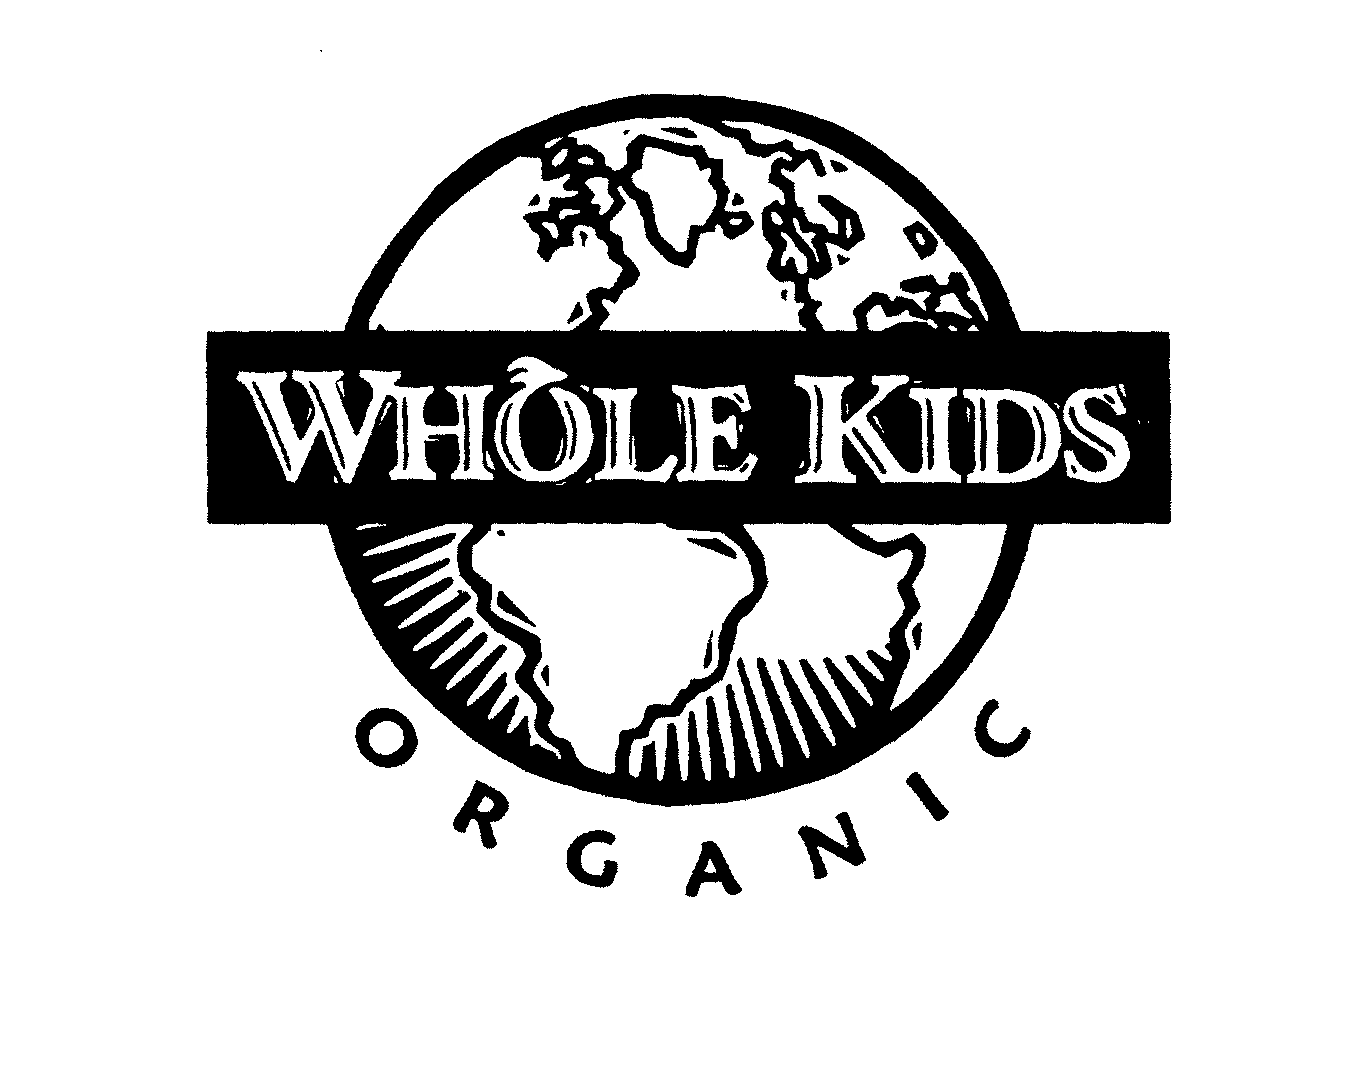 Trademark Logo WHOLE KIDS ORGANIC